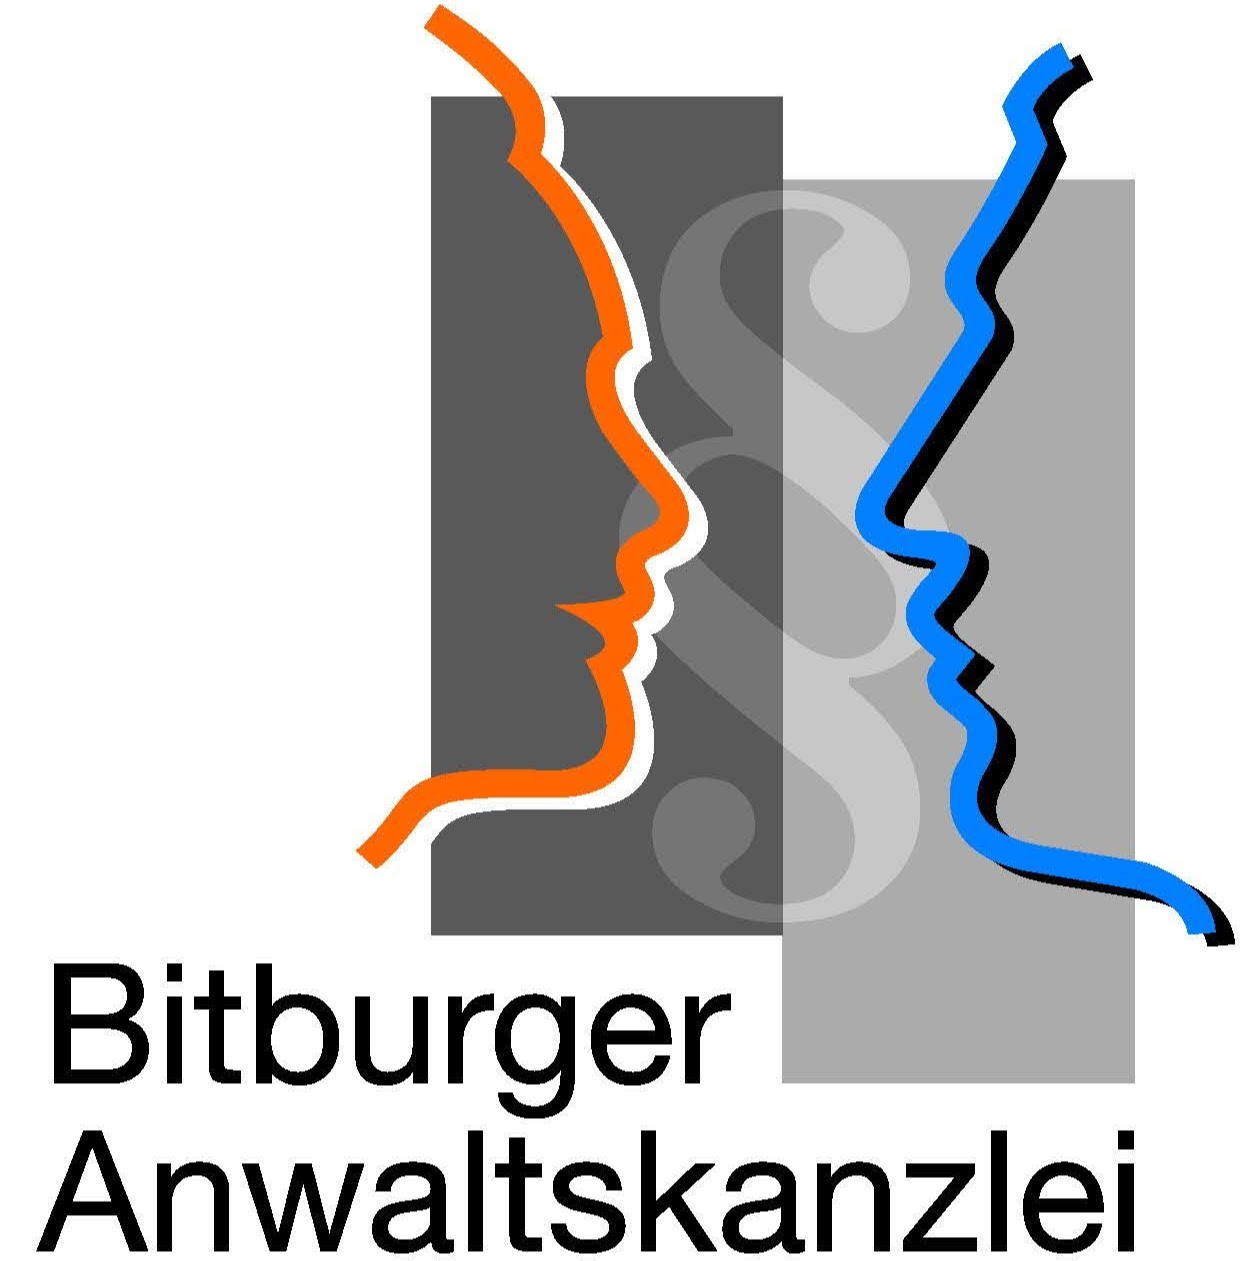 Bitburger Anwaltskanzlei Theisges & Kollegen